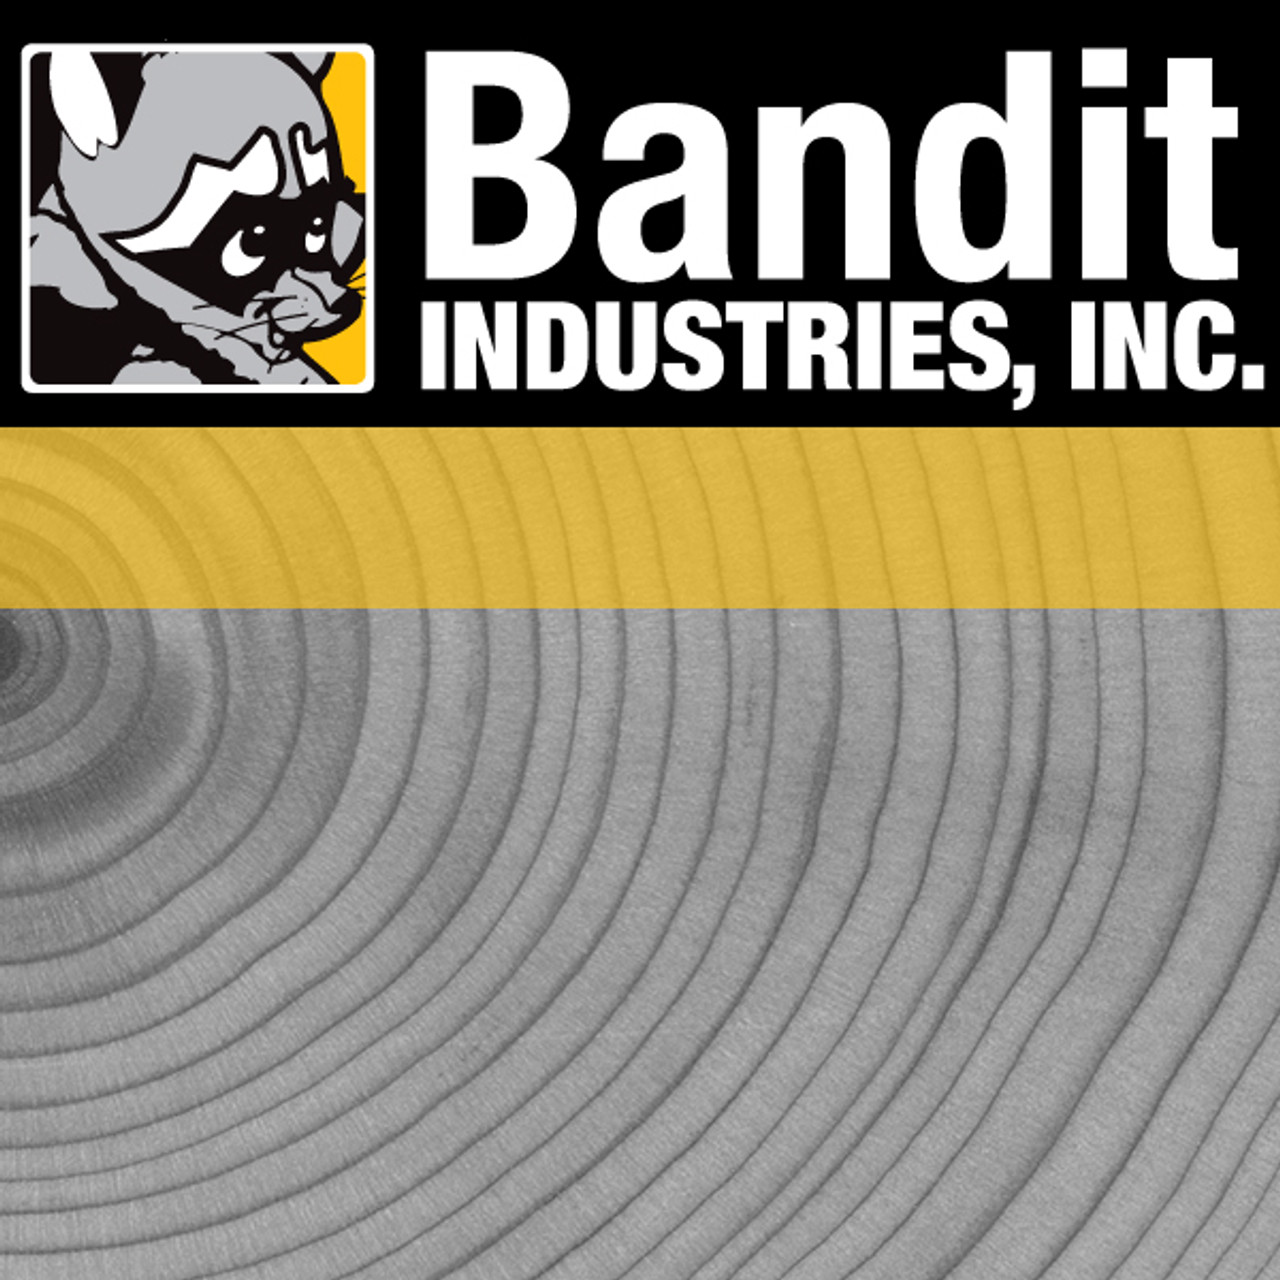 990-1012-57: BANDIT 24 1/2"" WIDE X 10 5/8 DIAMETER FEEDWHEELS